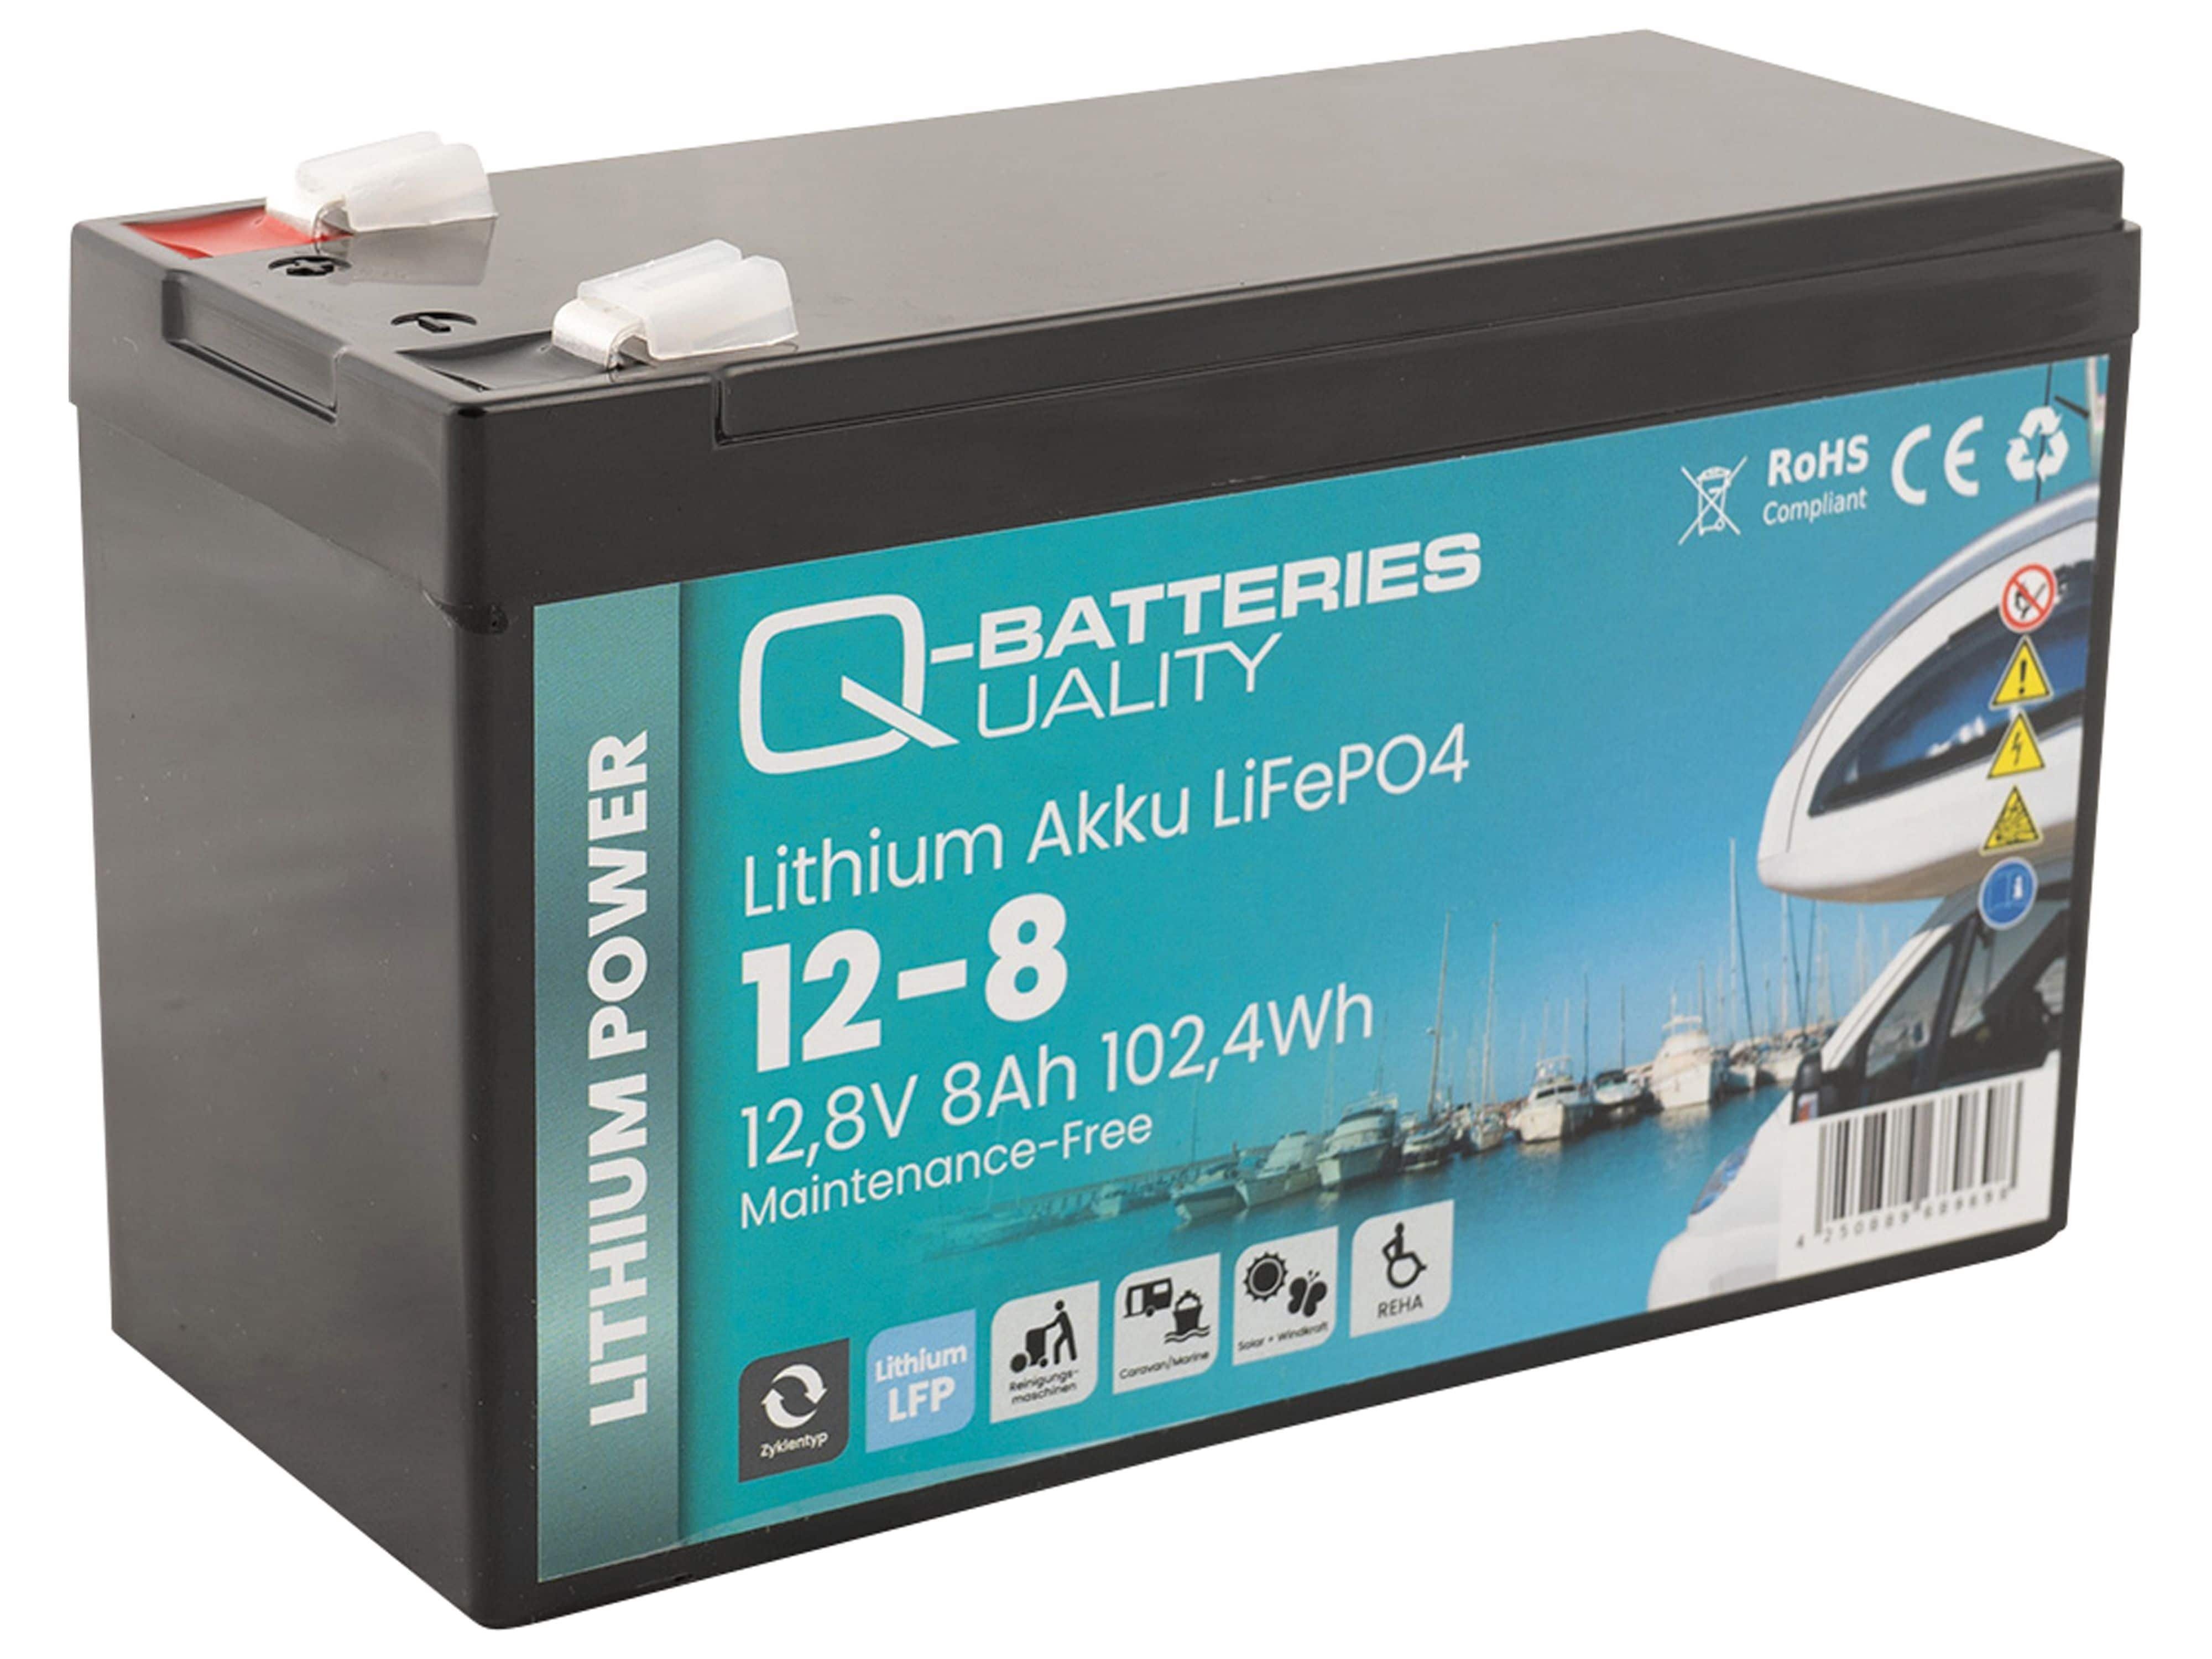 102,4Wh 12-8 Batterie 12,8V 8Ah, Q-Batteries Lithium Akku Q-BATTERIES